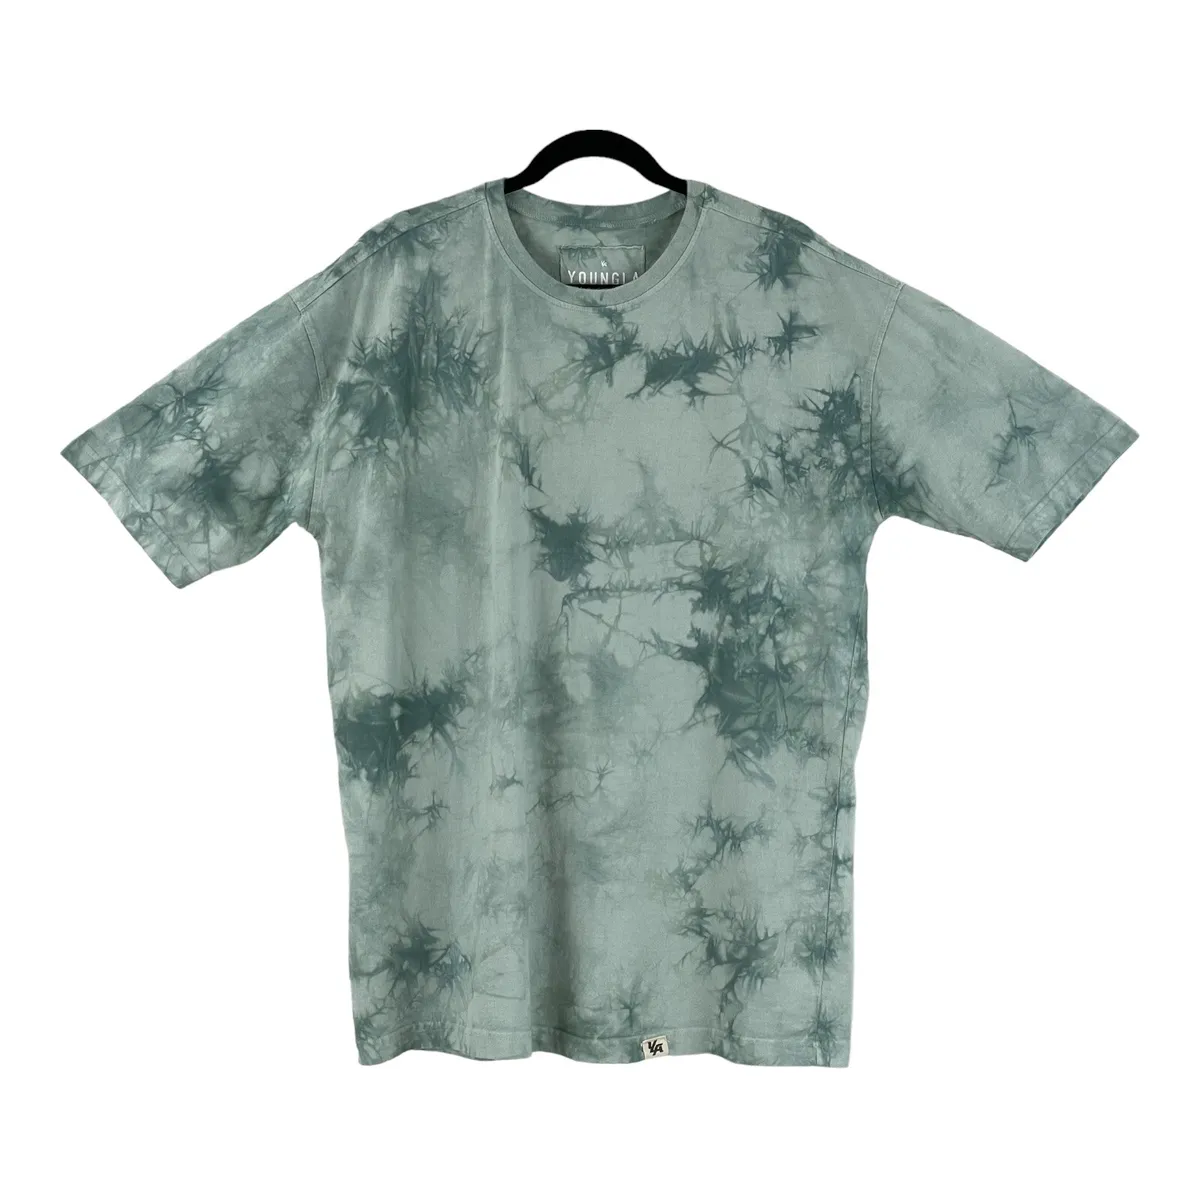 YoungLA Mens Tie Dye Green T-Shirt Short Sleeve Size Large 110/3